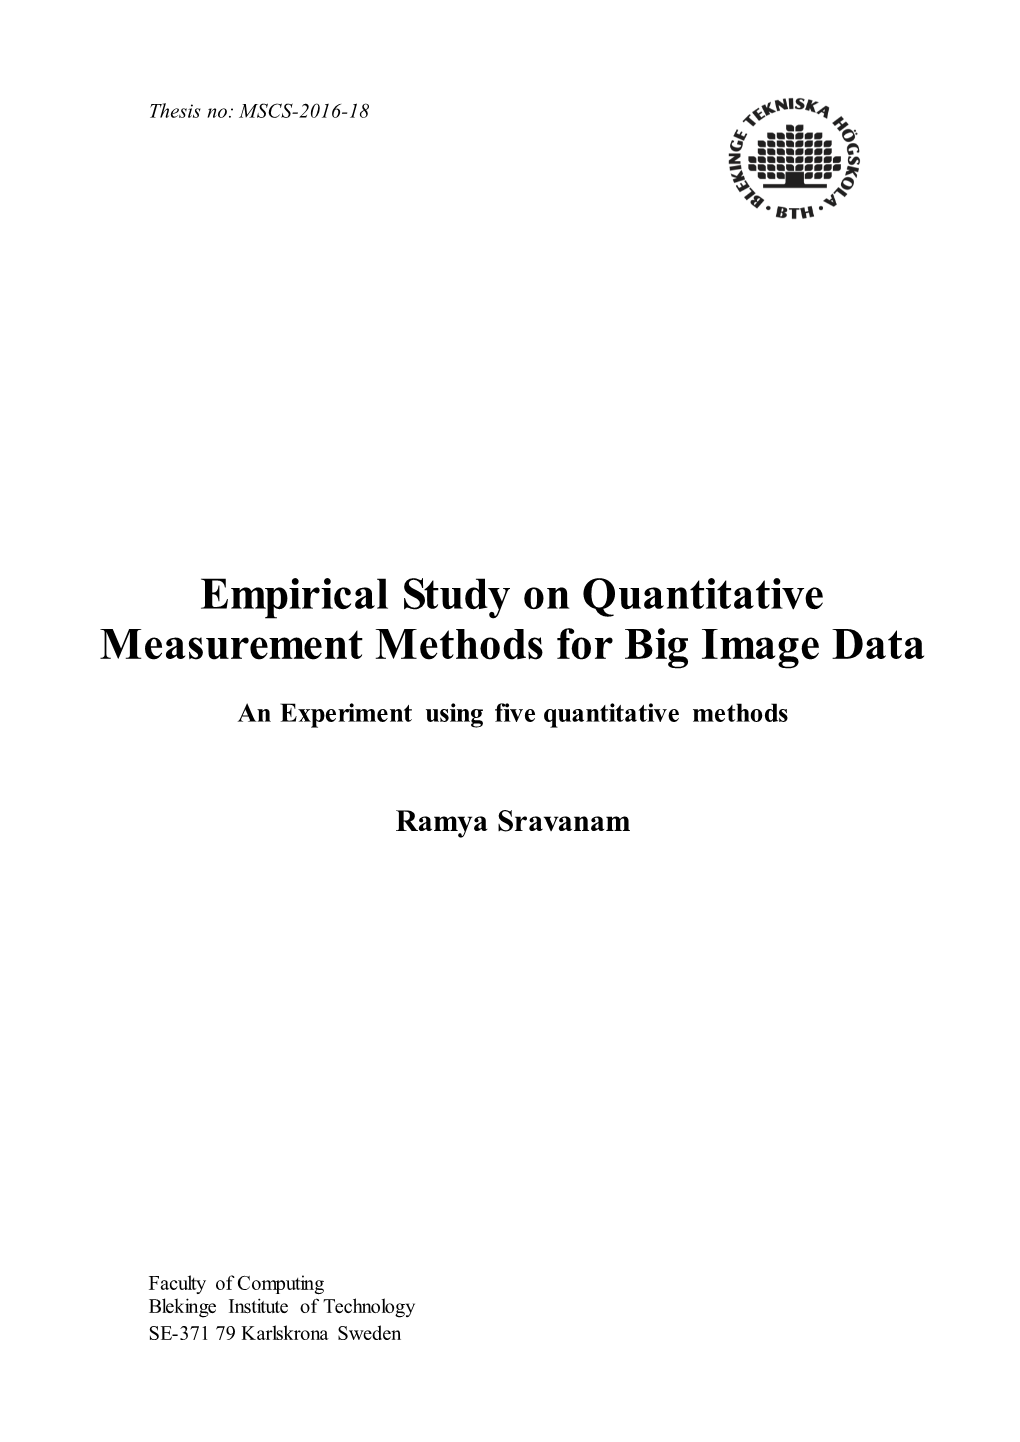 Empirical Study on Quantitative Measurement Methods for Big Image Data